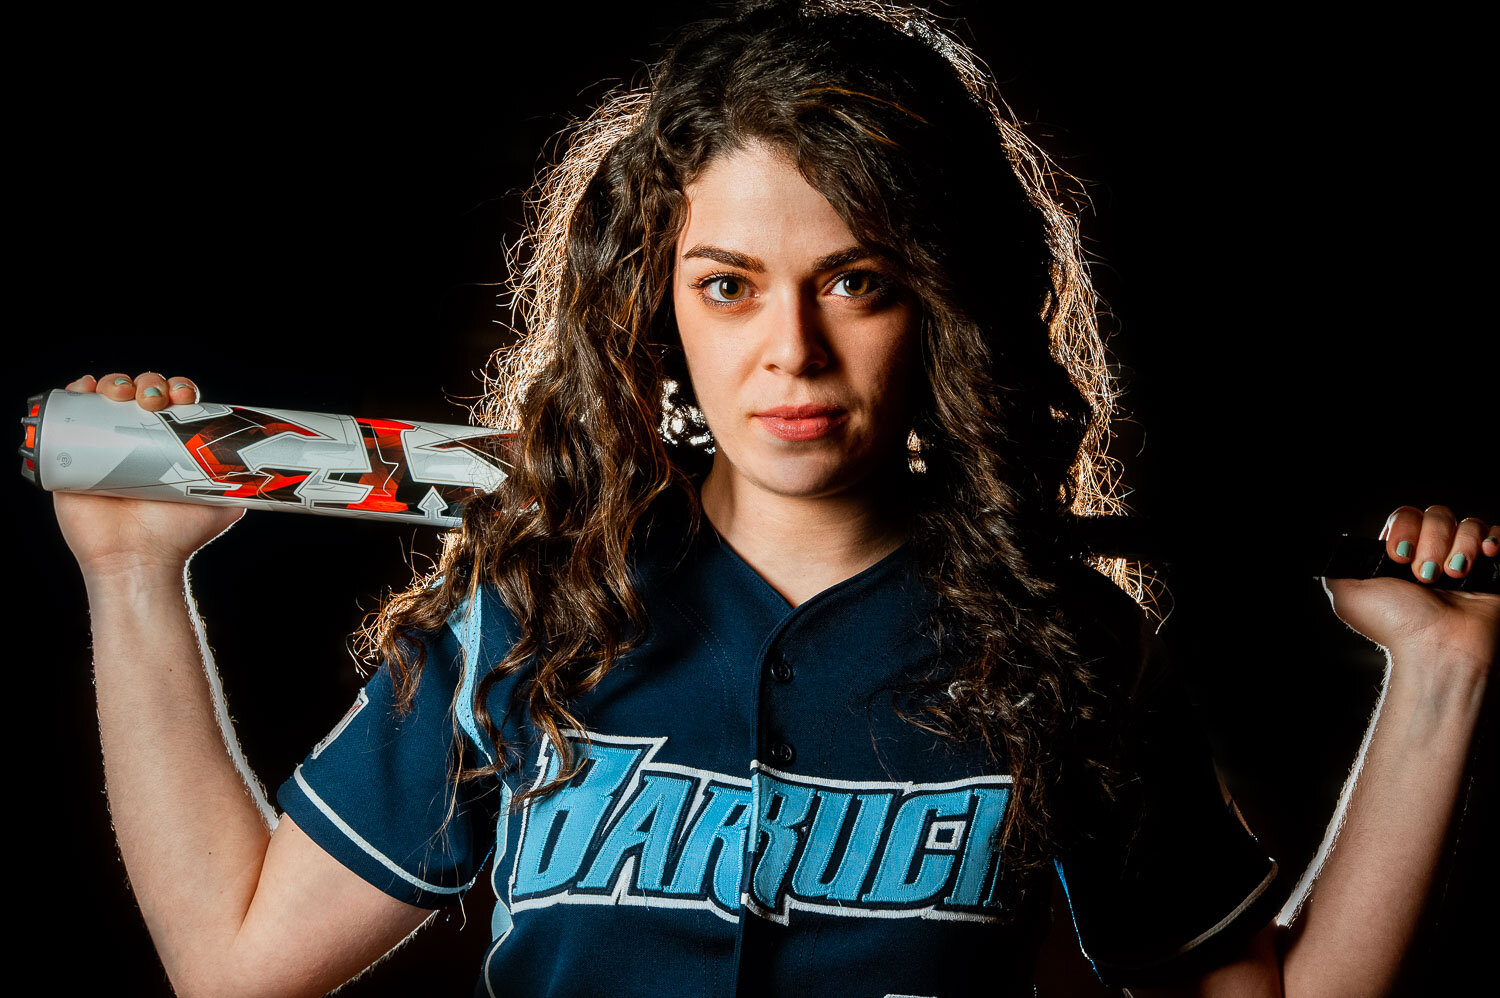  Baruch College Athletics Softball and Baseball Portraits 